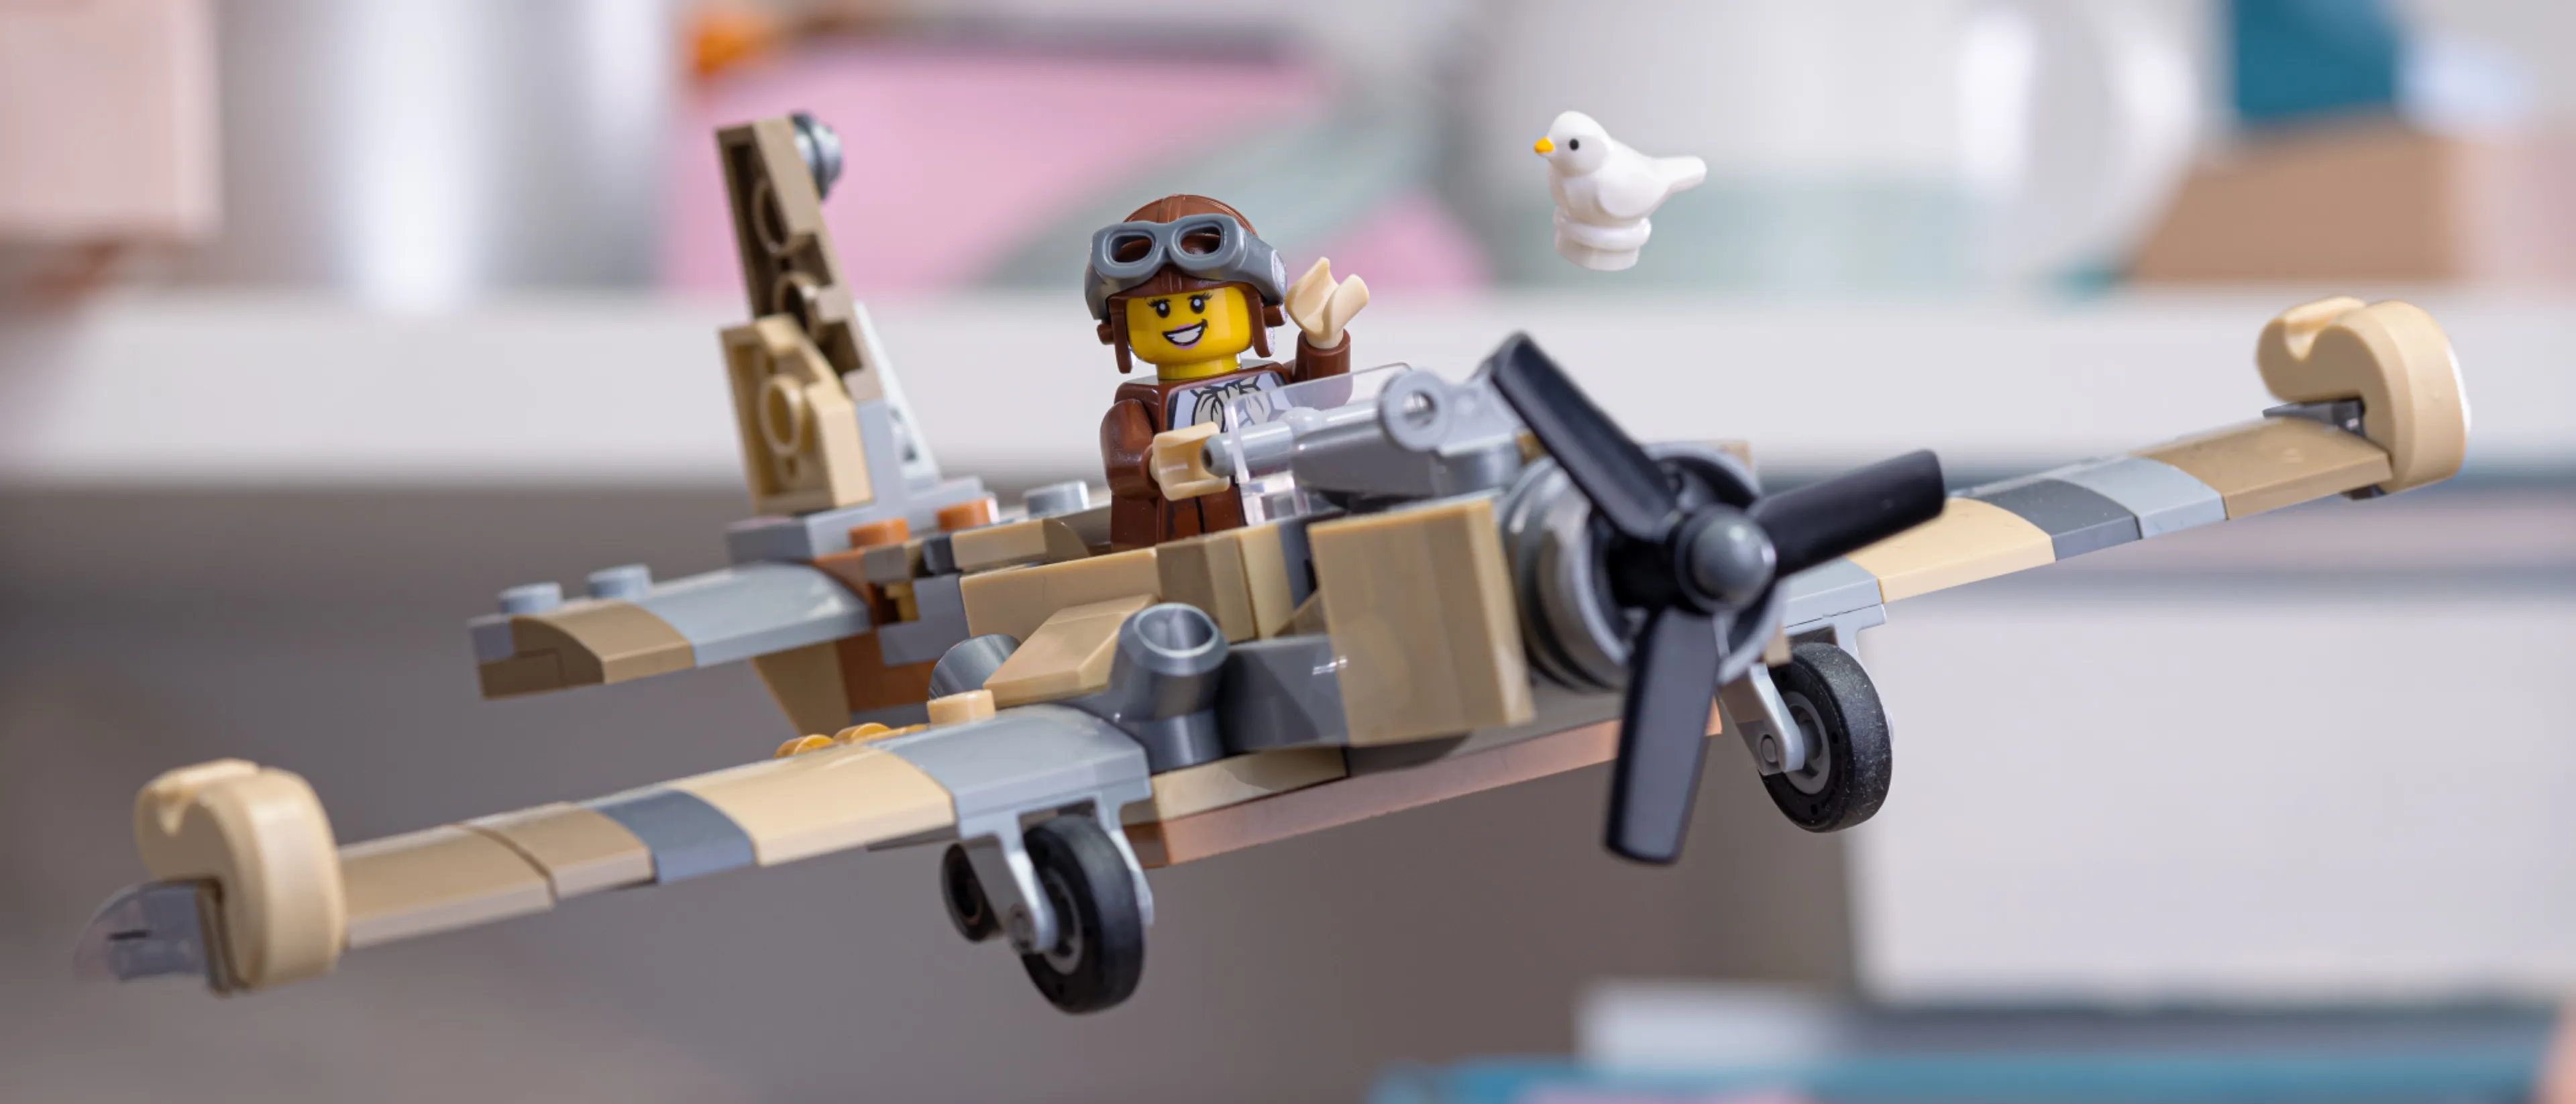 A minifigure flies a lego plane